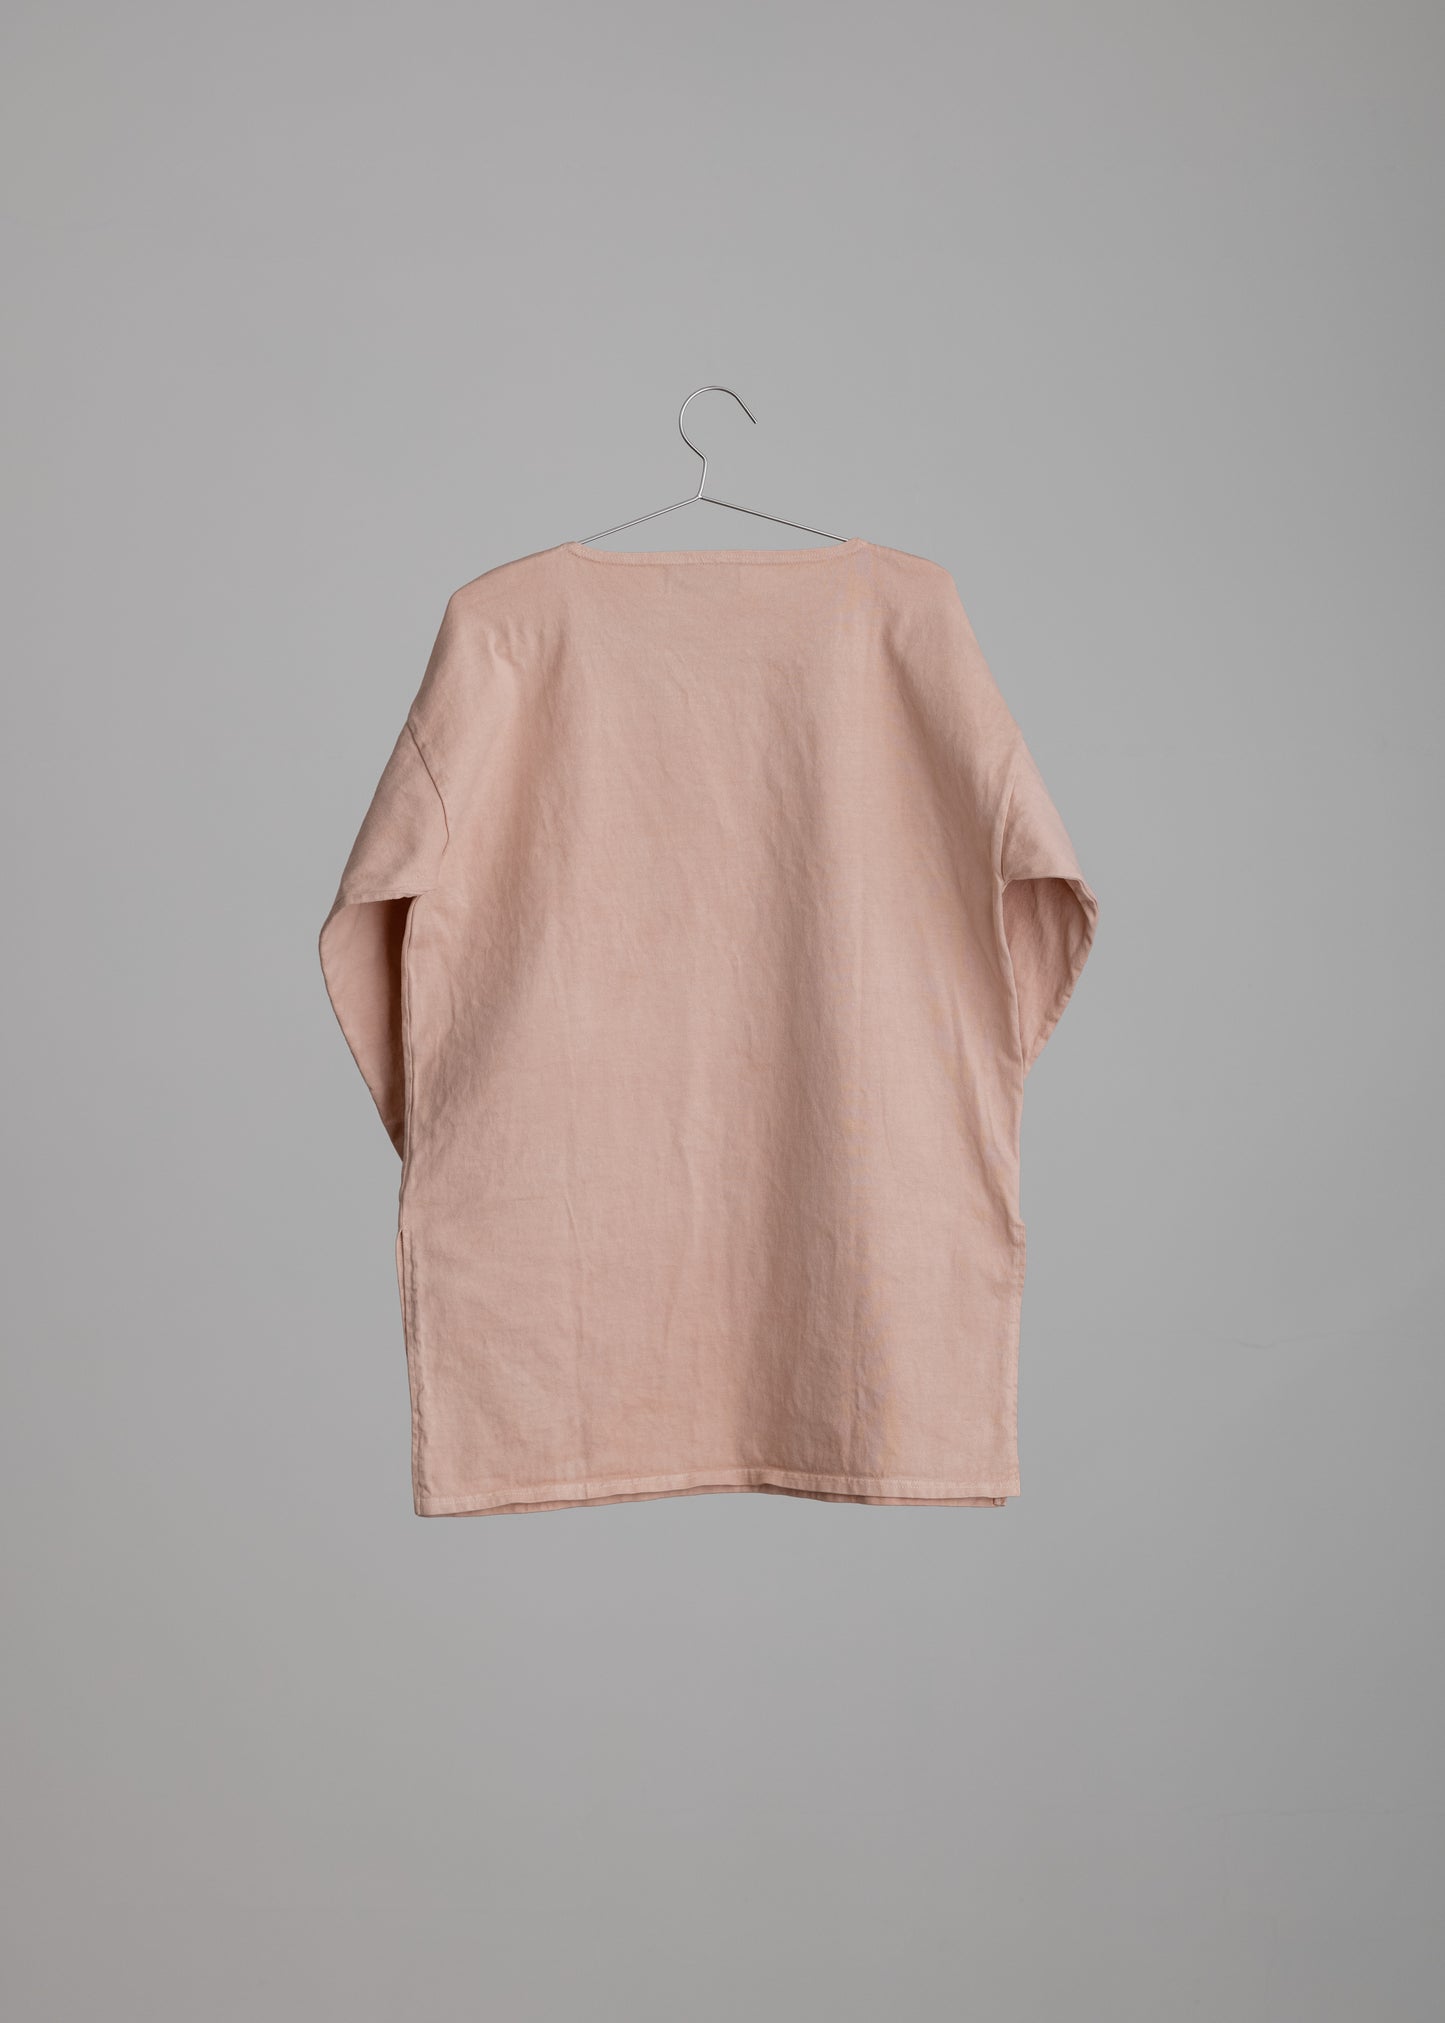 [ HAM IAM ] Regulations " UME garment dyed 梅染め " classic fisherman basque shirt #middle length c/# plum pink